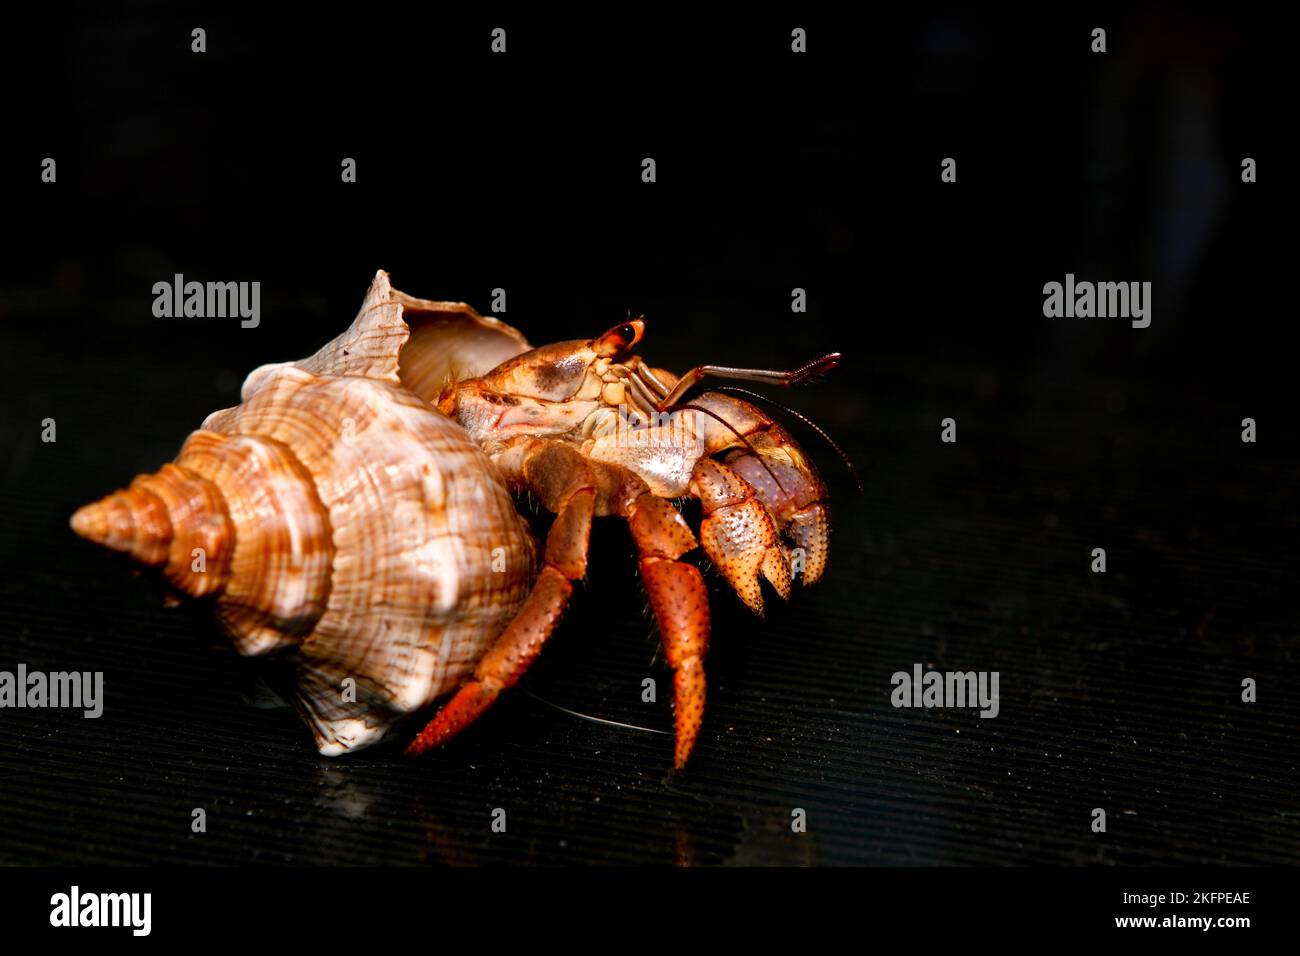 land hermit crab on black background Stock Photo